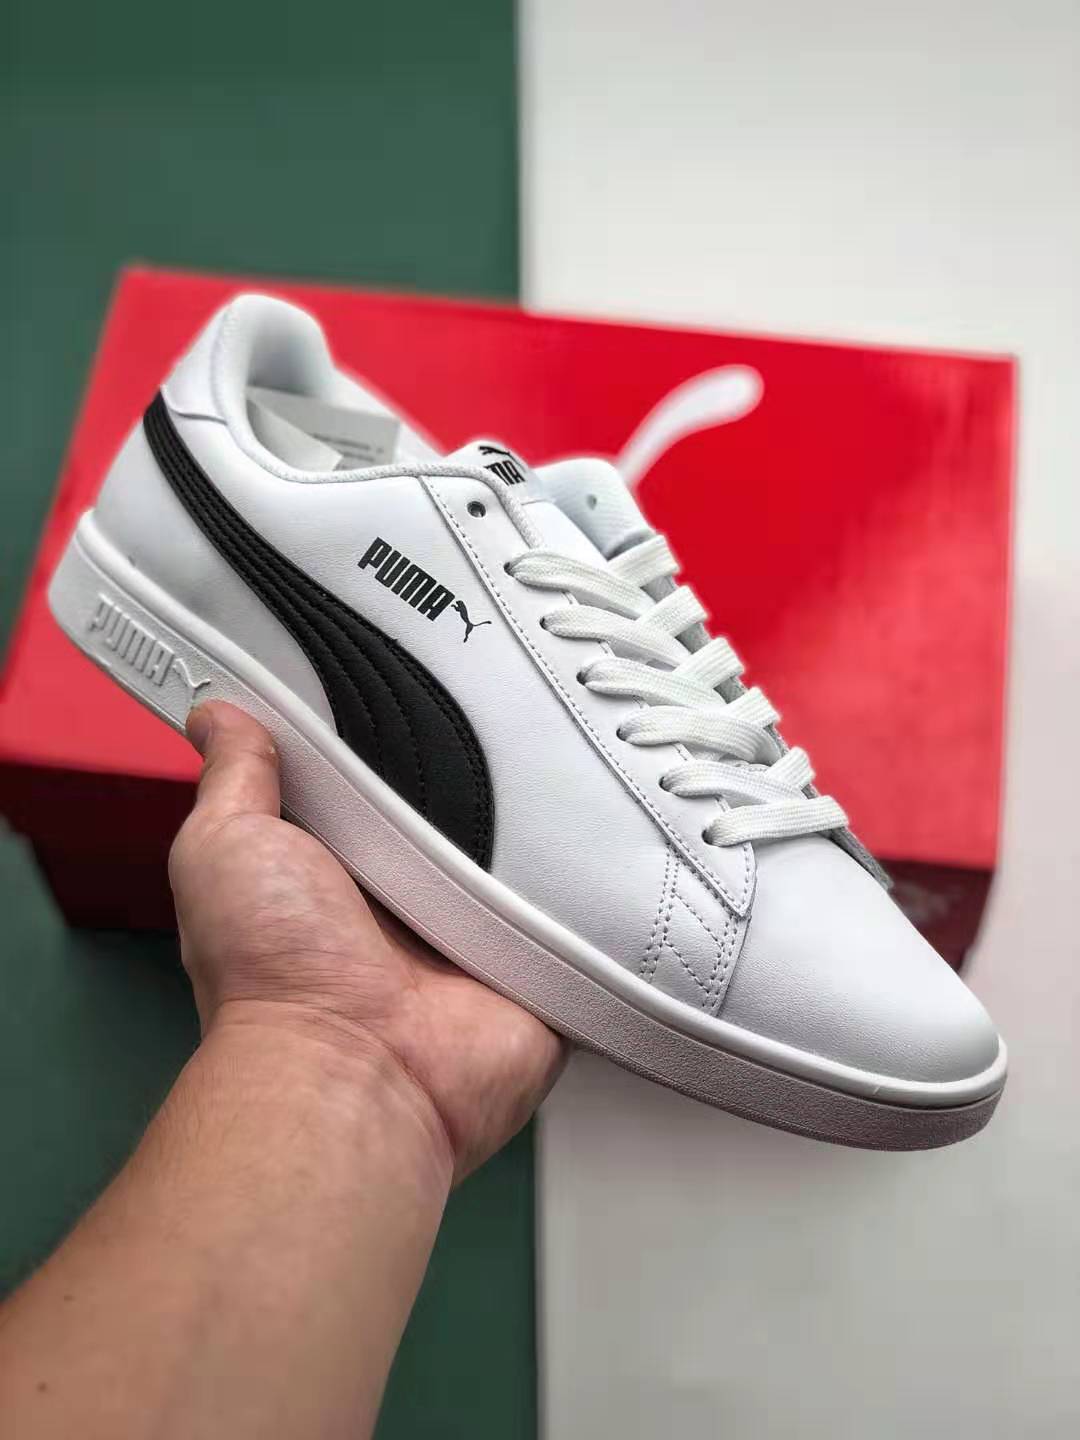 PUMA Smash V2 'White Black' 365215-01 - Sleek and Stylish Sneakers for Men - [Website Name]